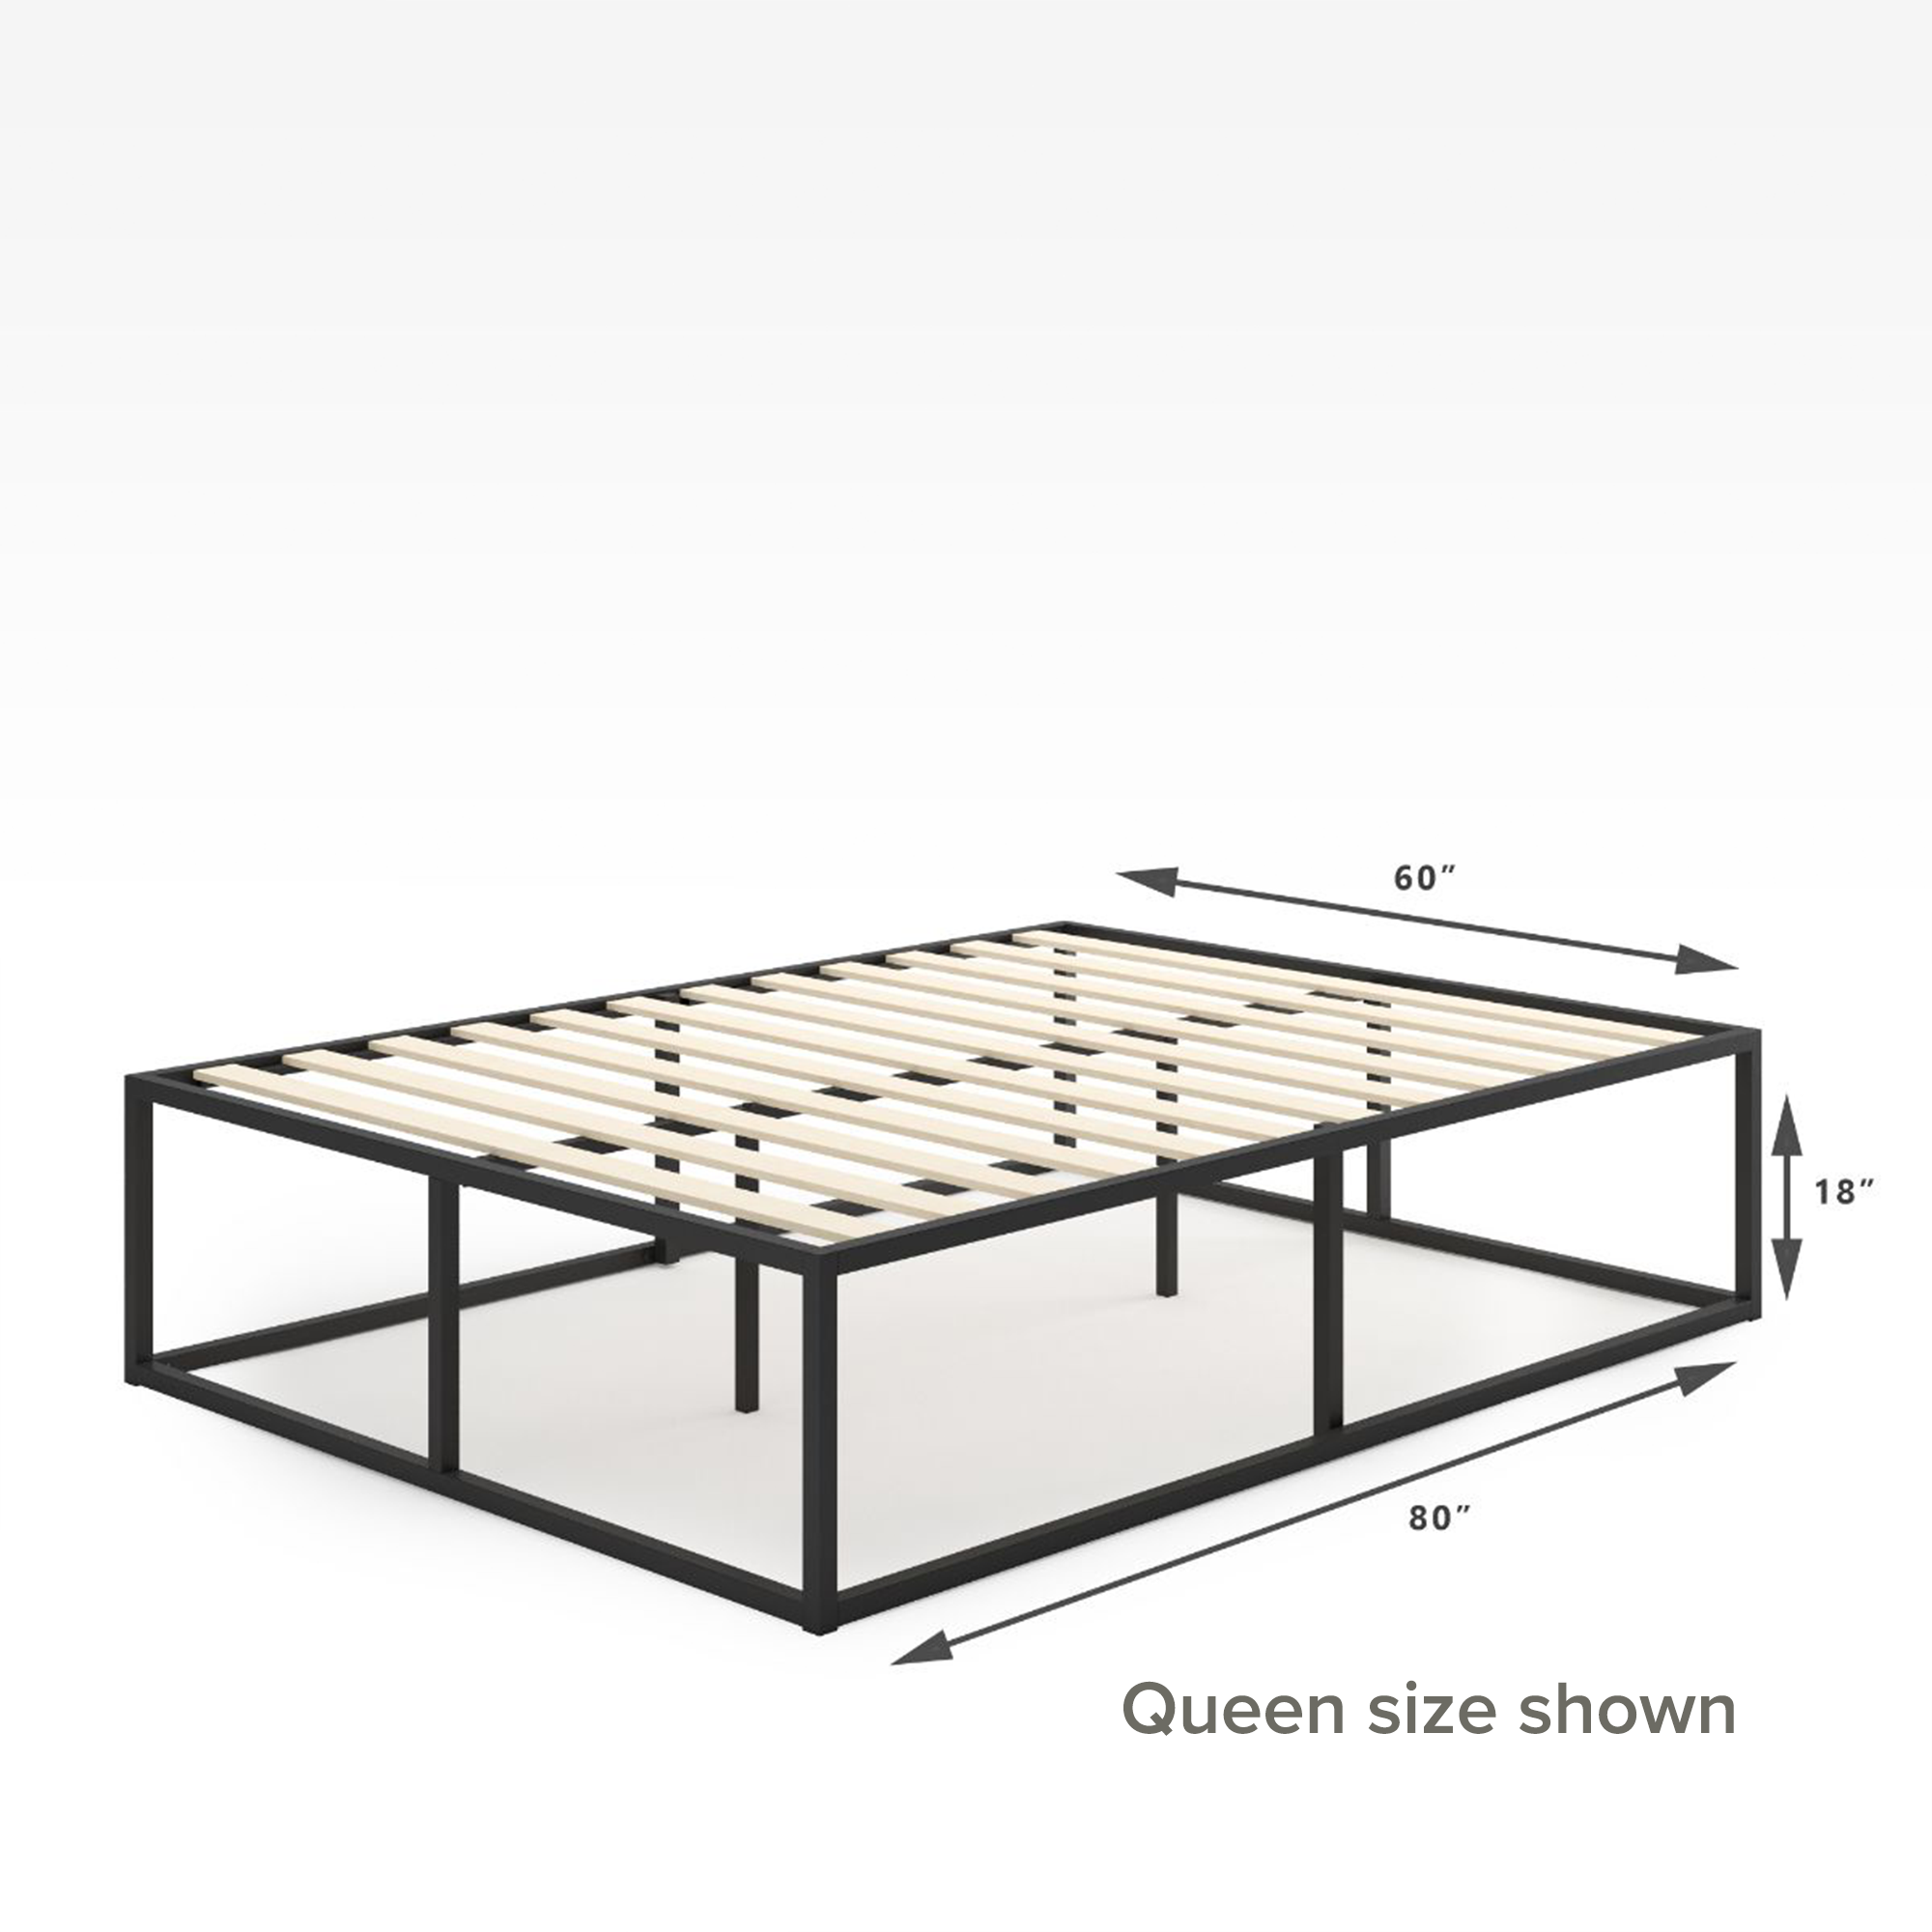 18 inch Joseph Metal Platform Bed frame Quarter queen size Dimensions